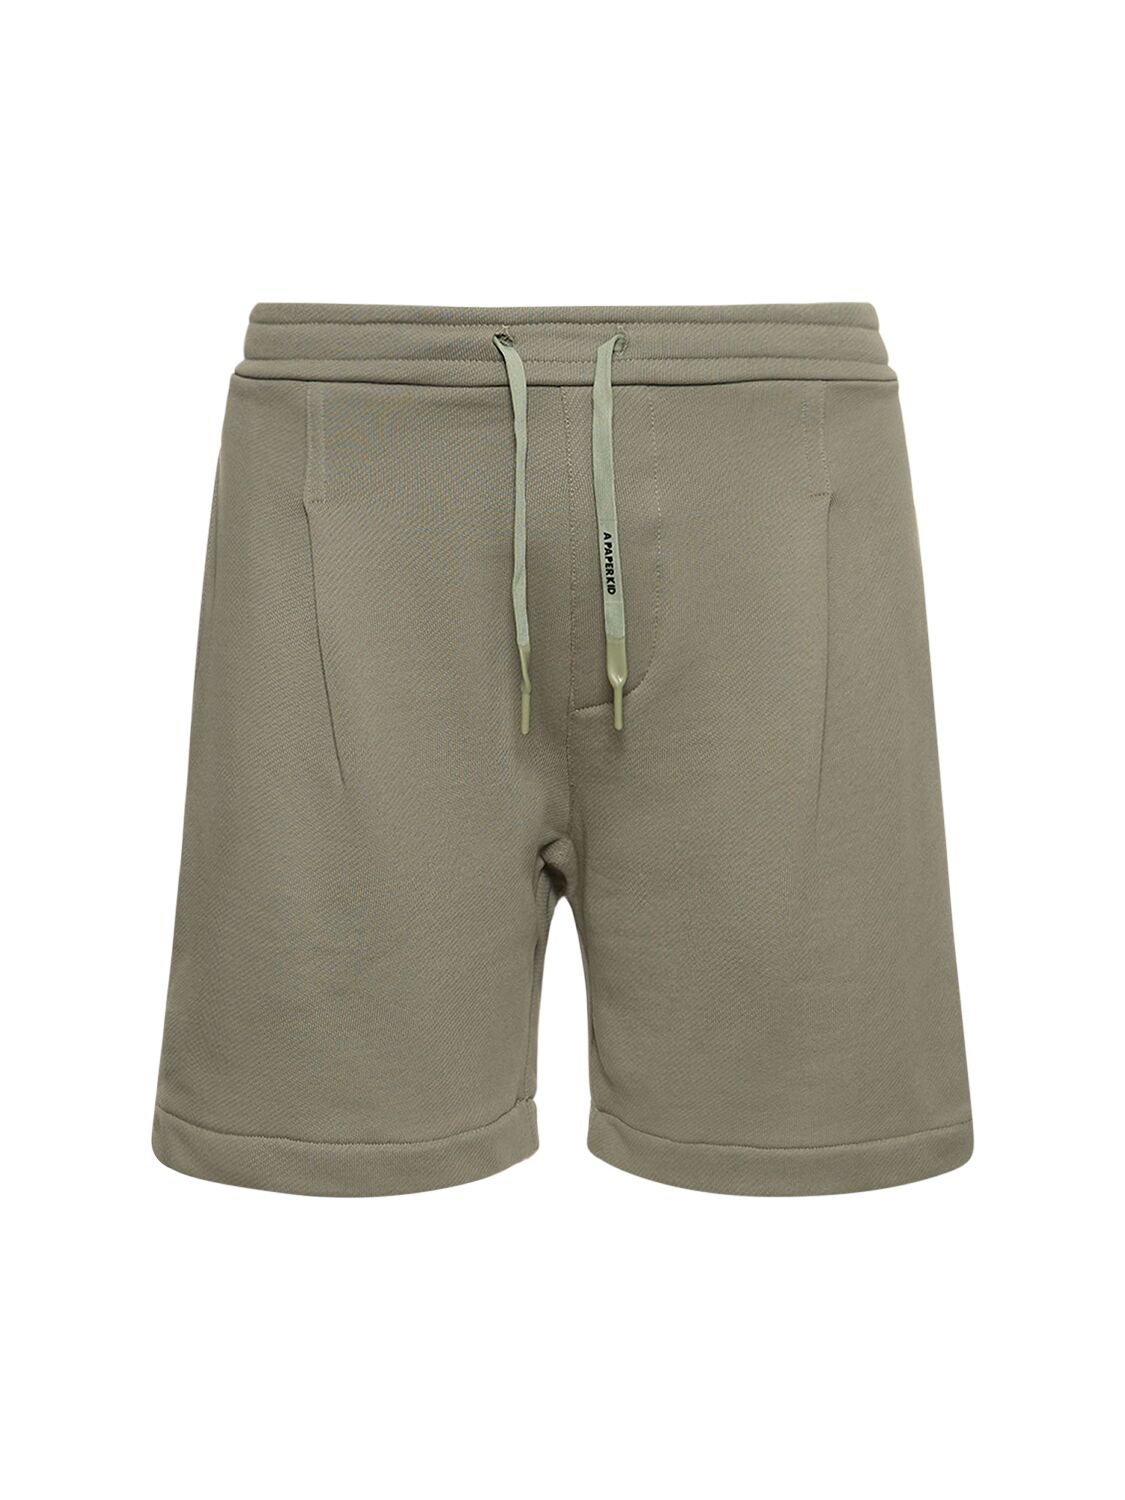 A PAPER KID Unisex Cotton Sweat Shorts